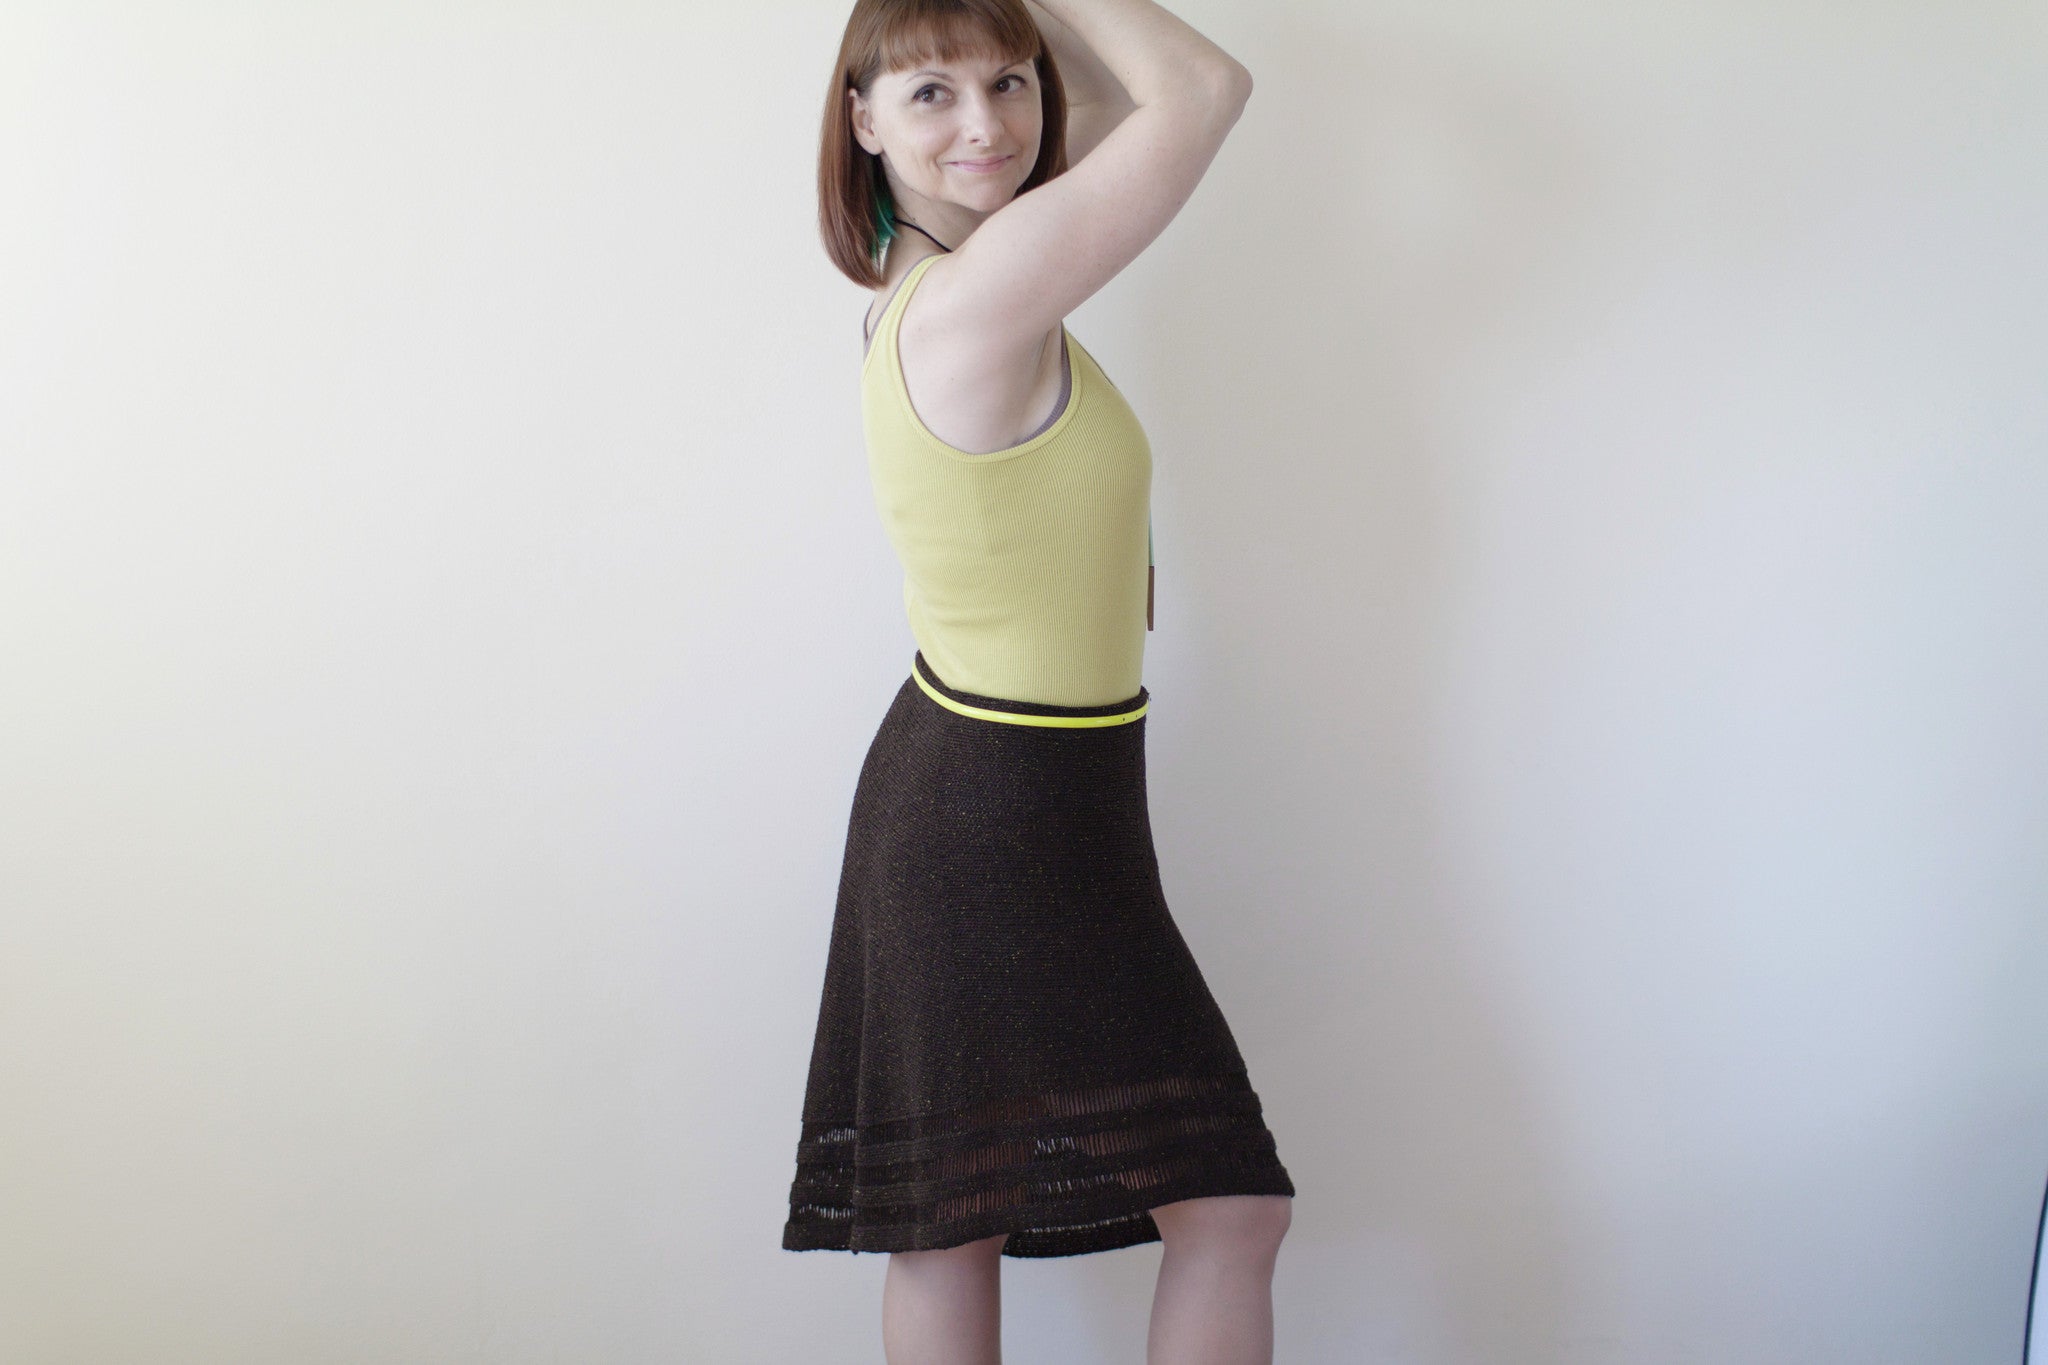 Heichi Skirt by Olgajazzy